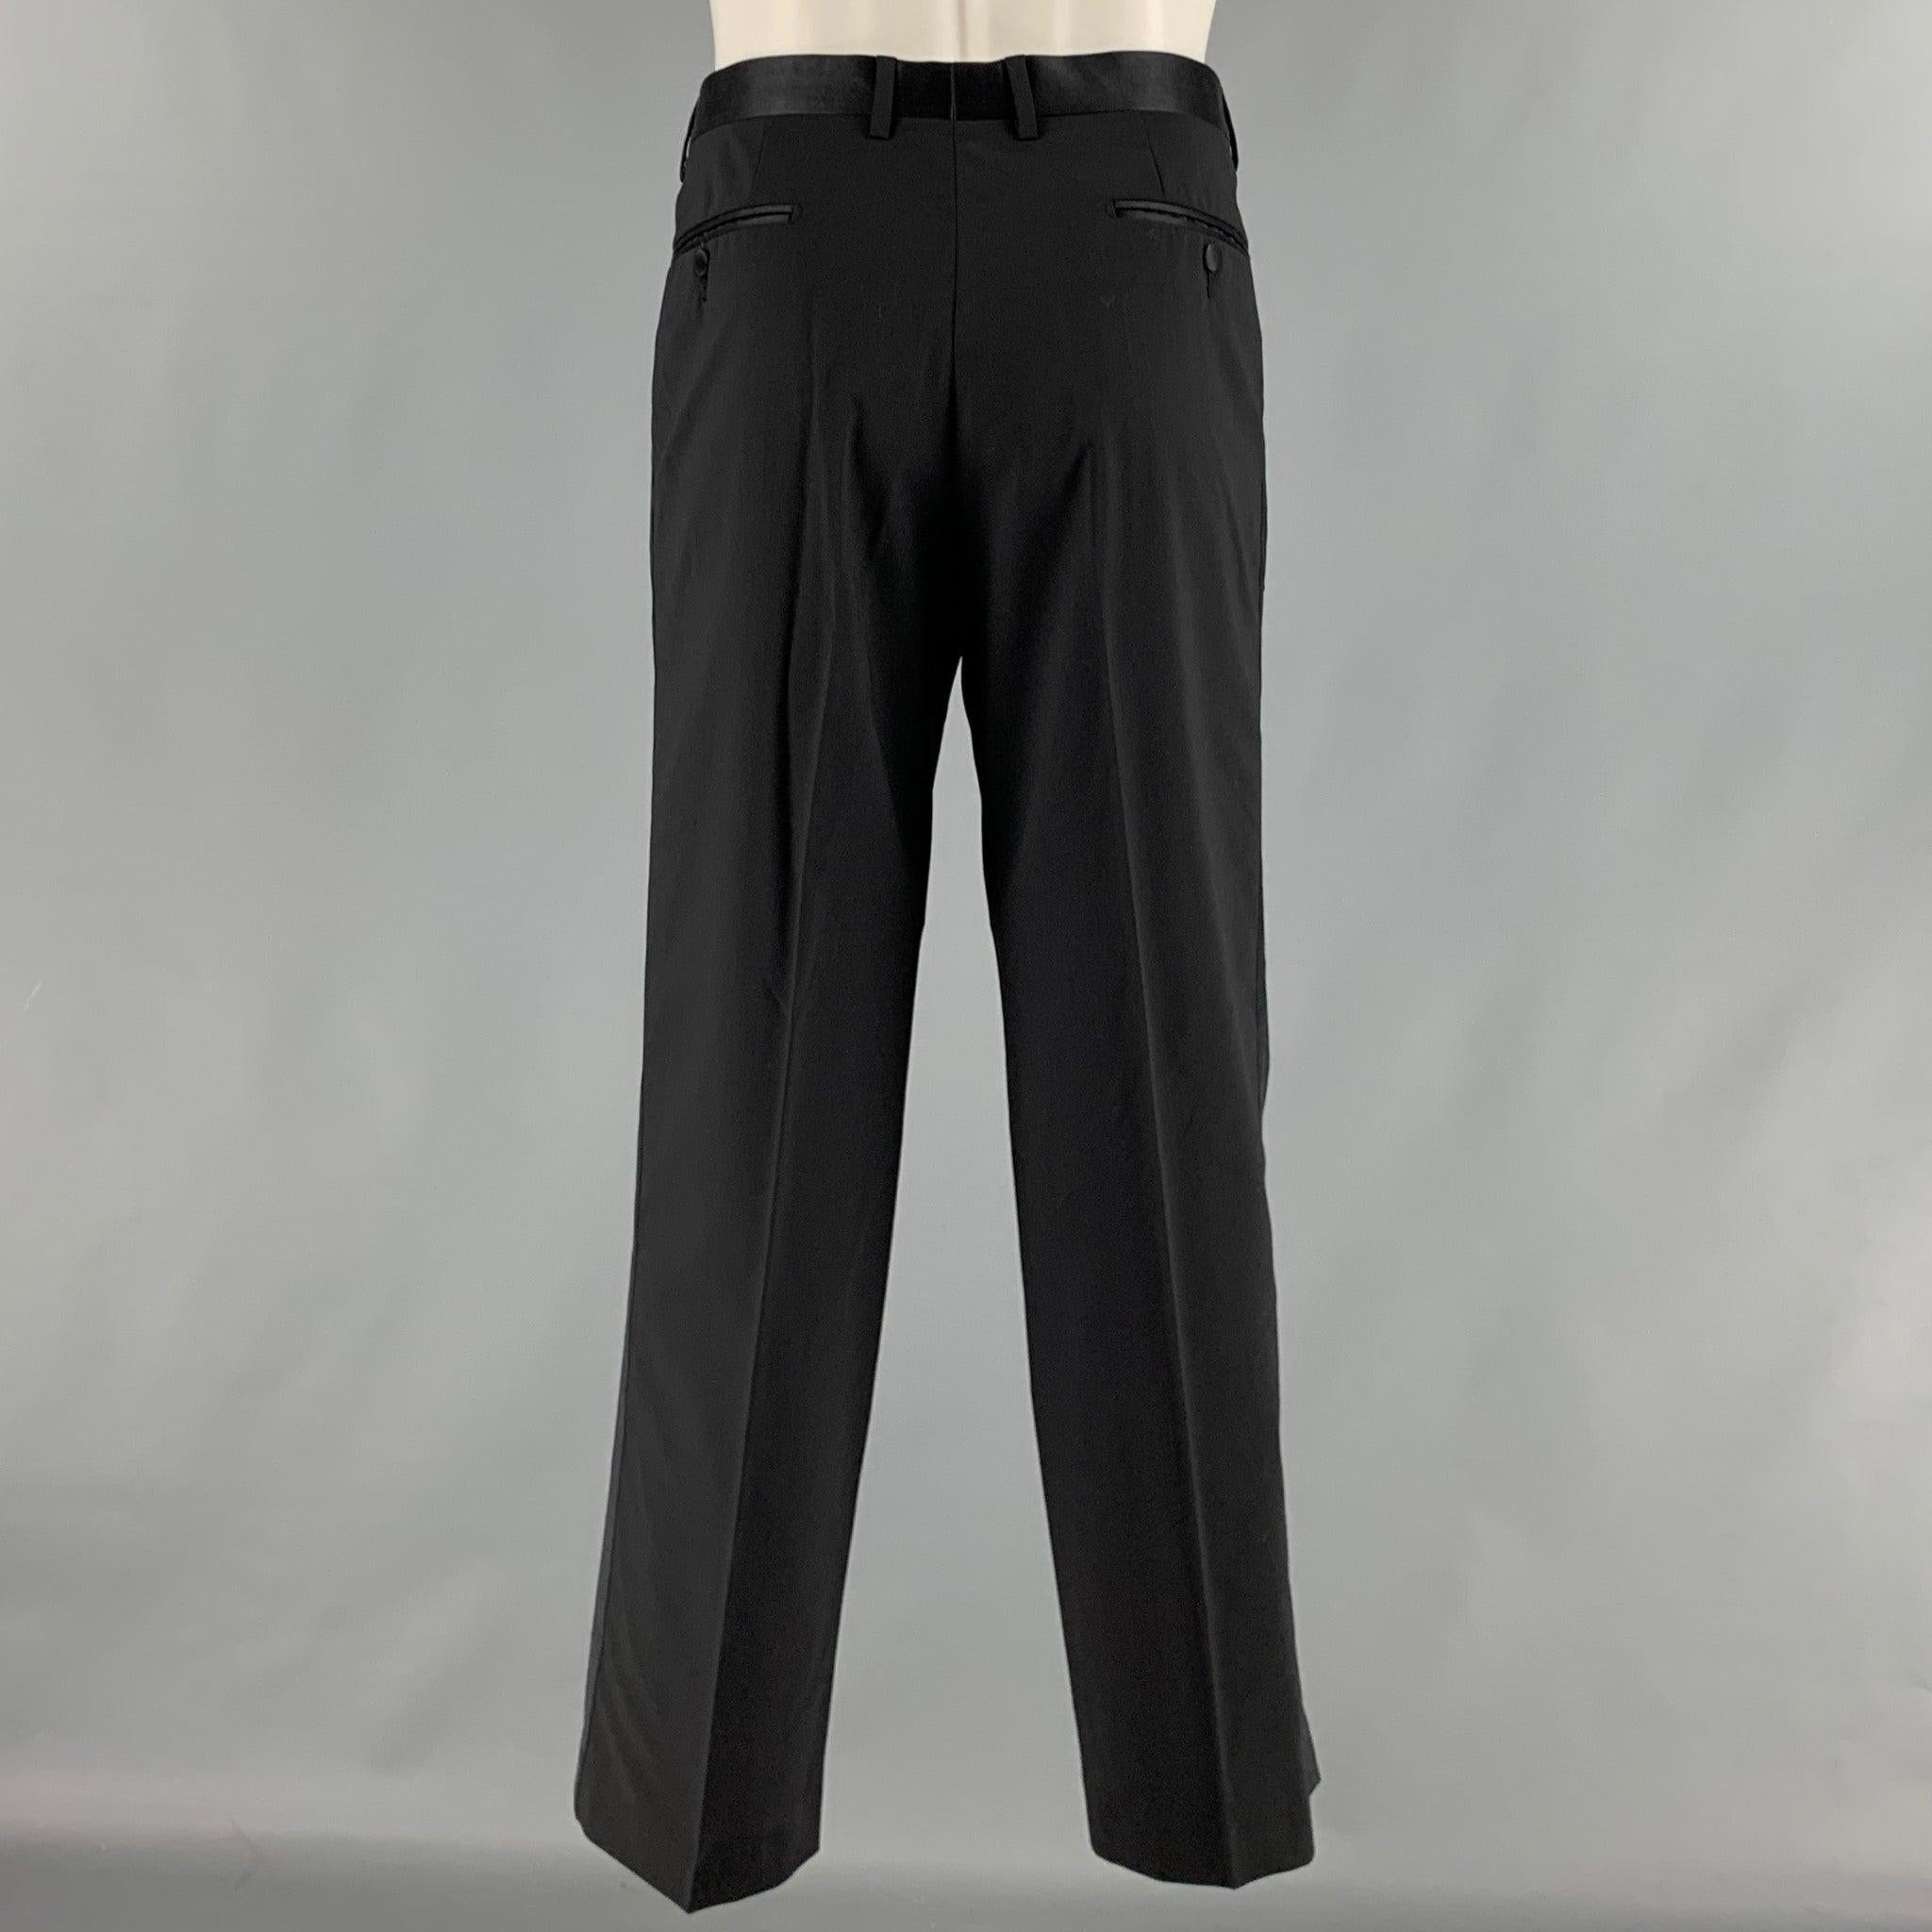 Men's D&G by DOLCE & GABBANA Size 32 Black Solid Wool Blend Tuxedo Dress Pants For Sale